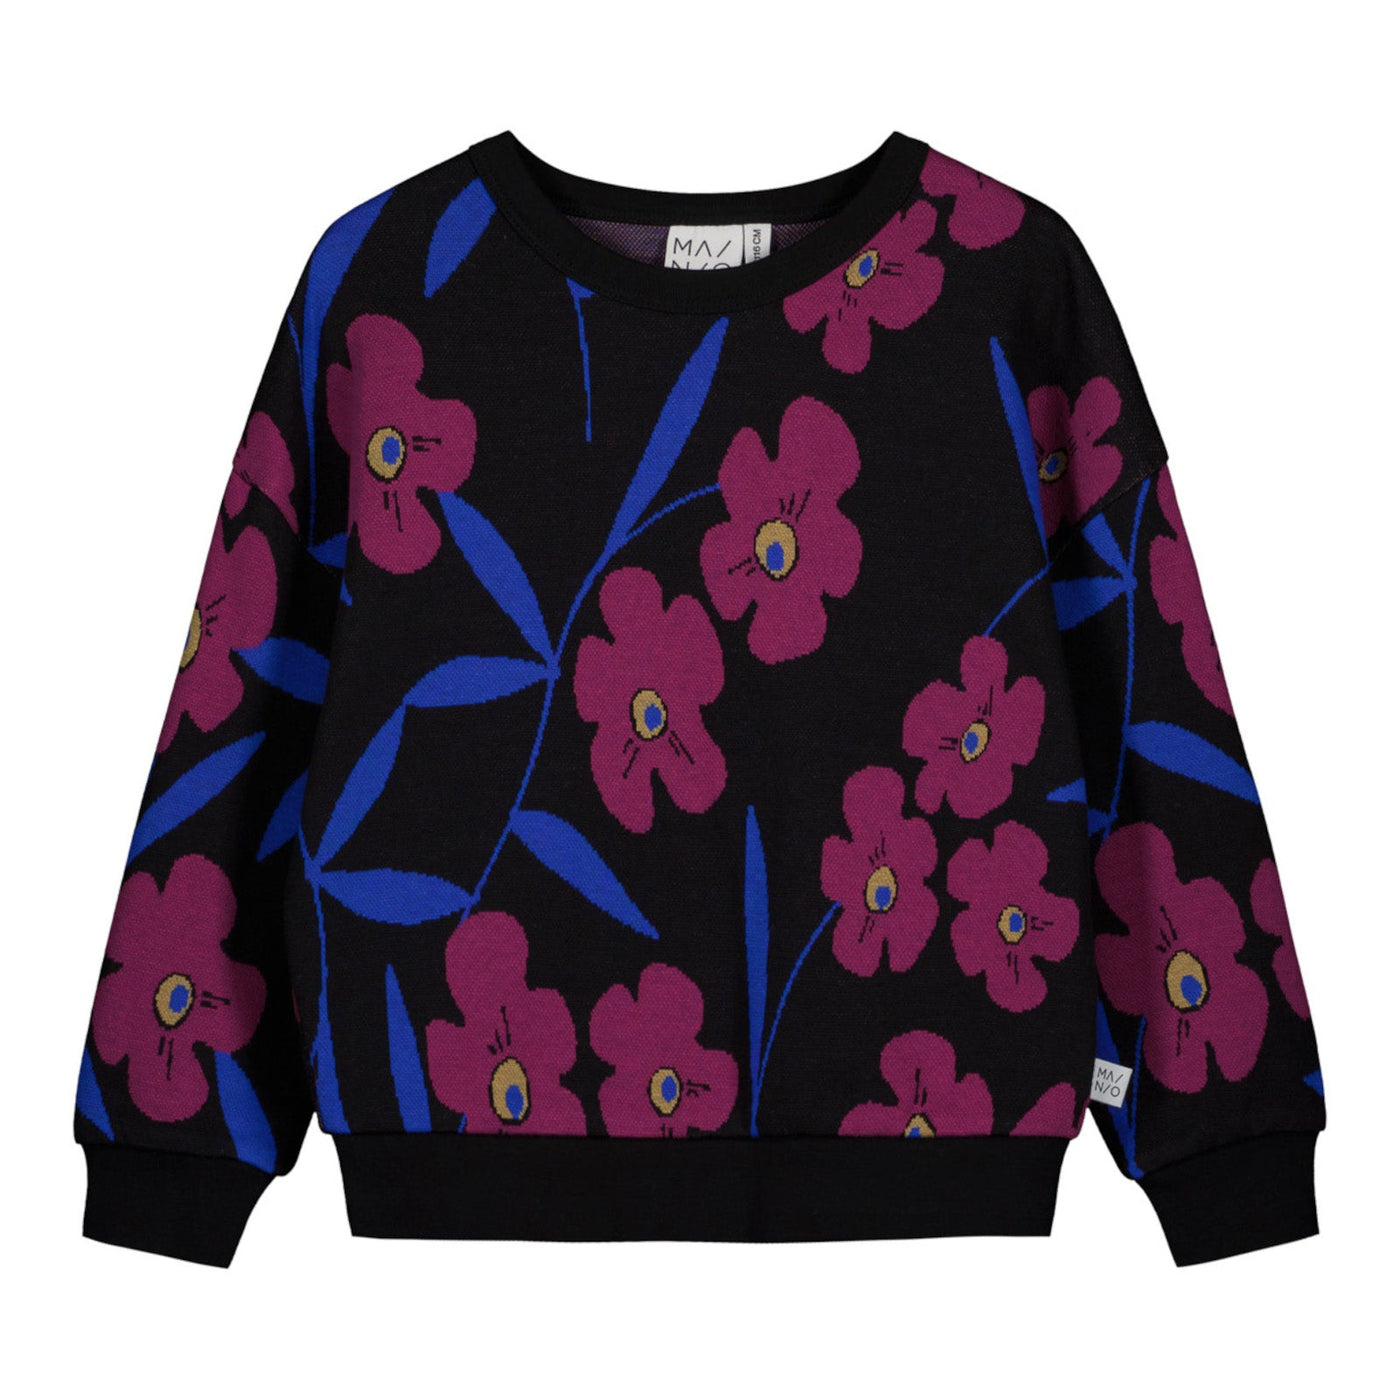 Mysterious Blooms Jacquard Sweatshirt by Mainio - Petite Belle